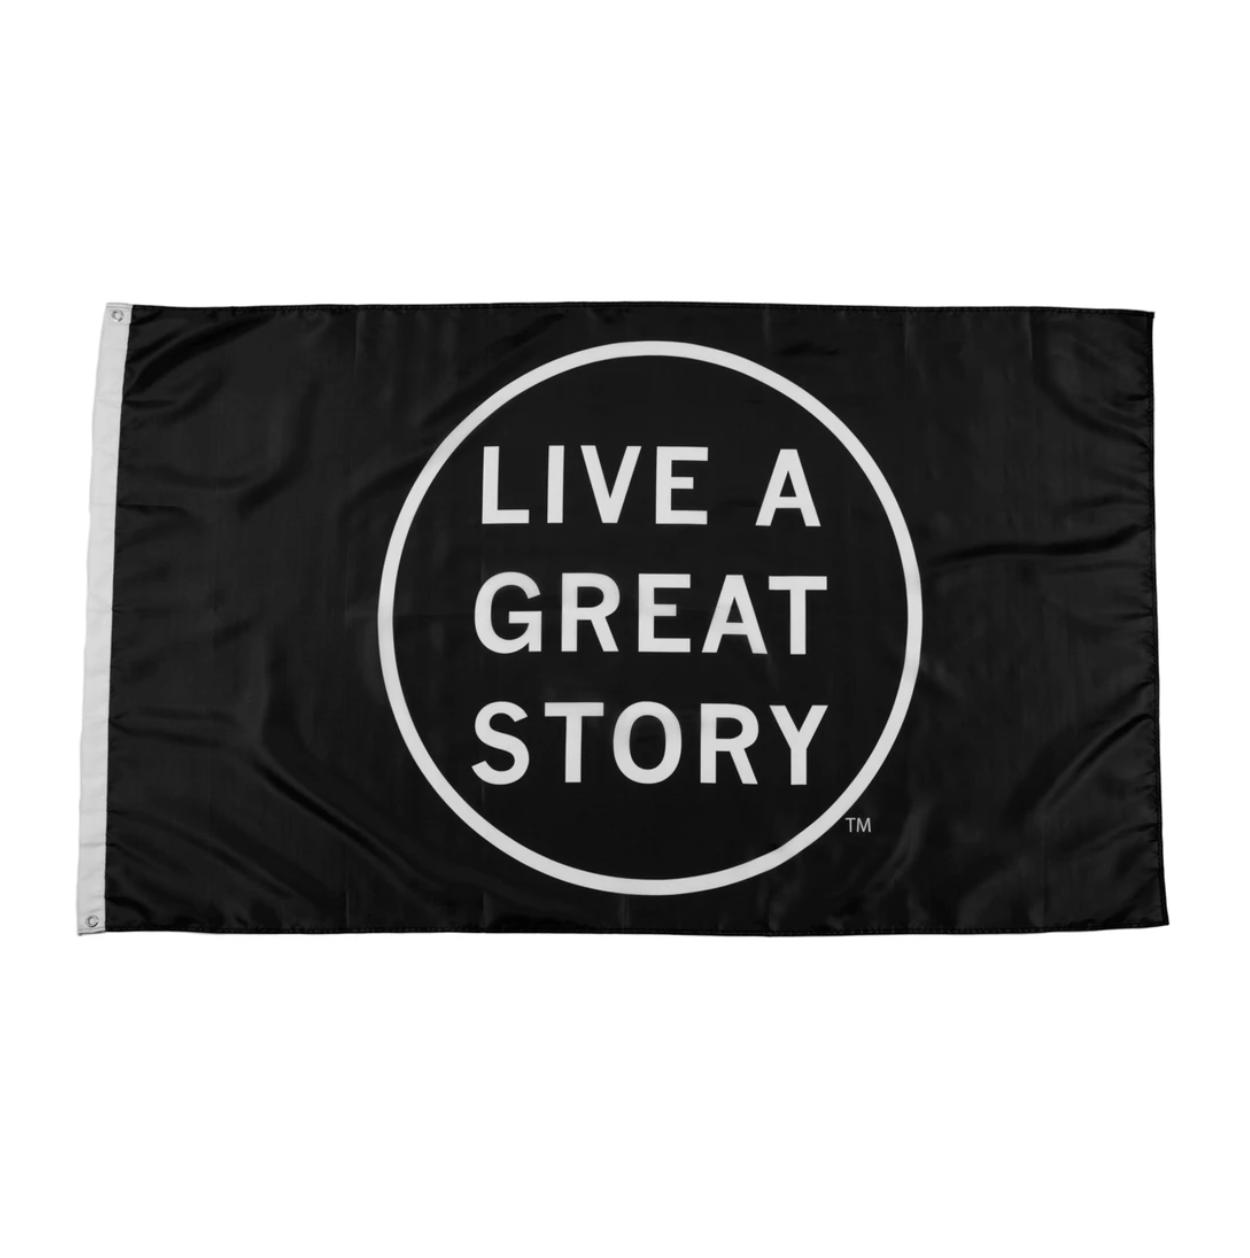 A black LIVE A GREAT STORY Mini Adventure Flag